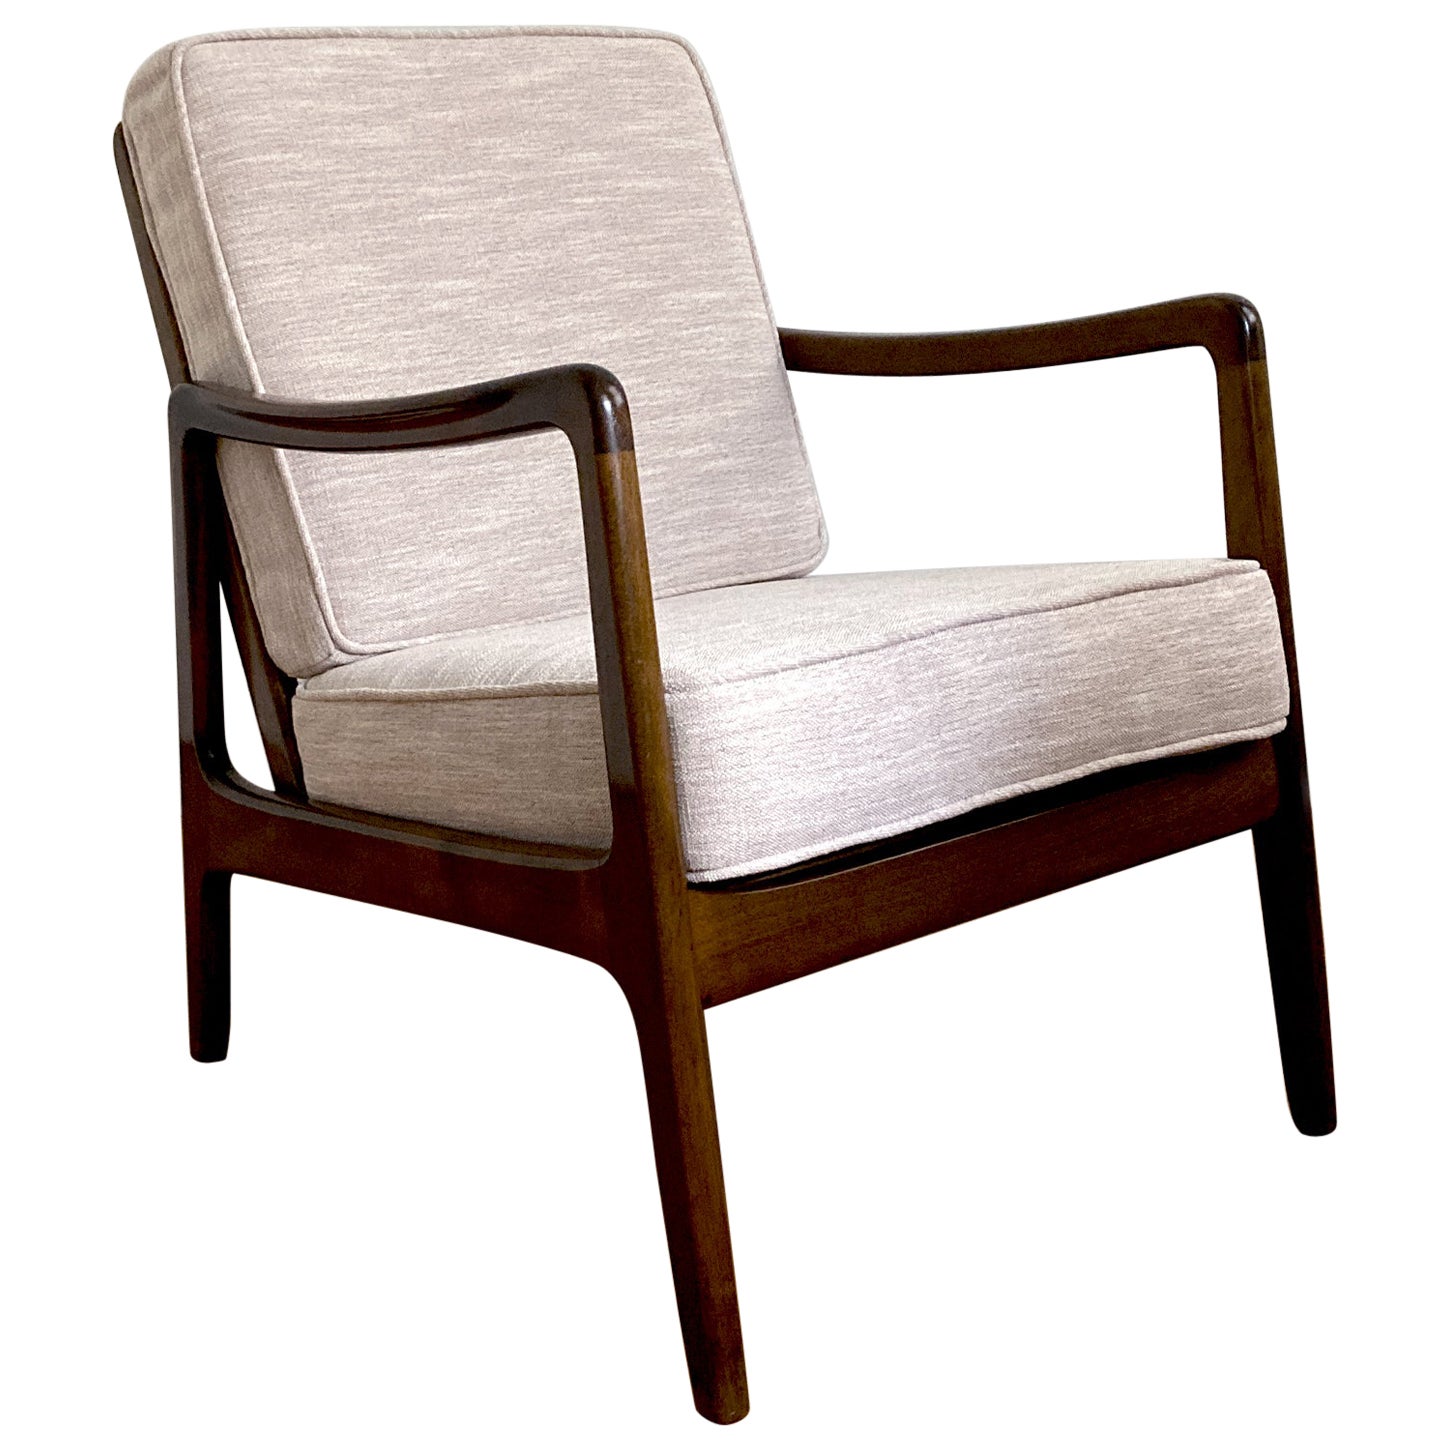 Ole Wanscher for John Stuart Walnut Lounge Chair Reupholstered in Blush Tweed (Chaise longue en noyer recouverte de tweed blush)